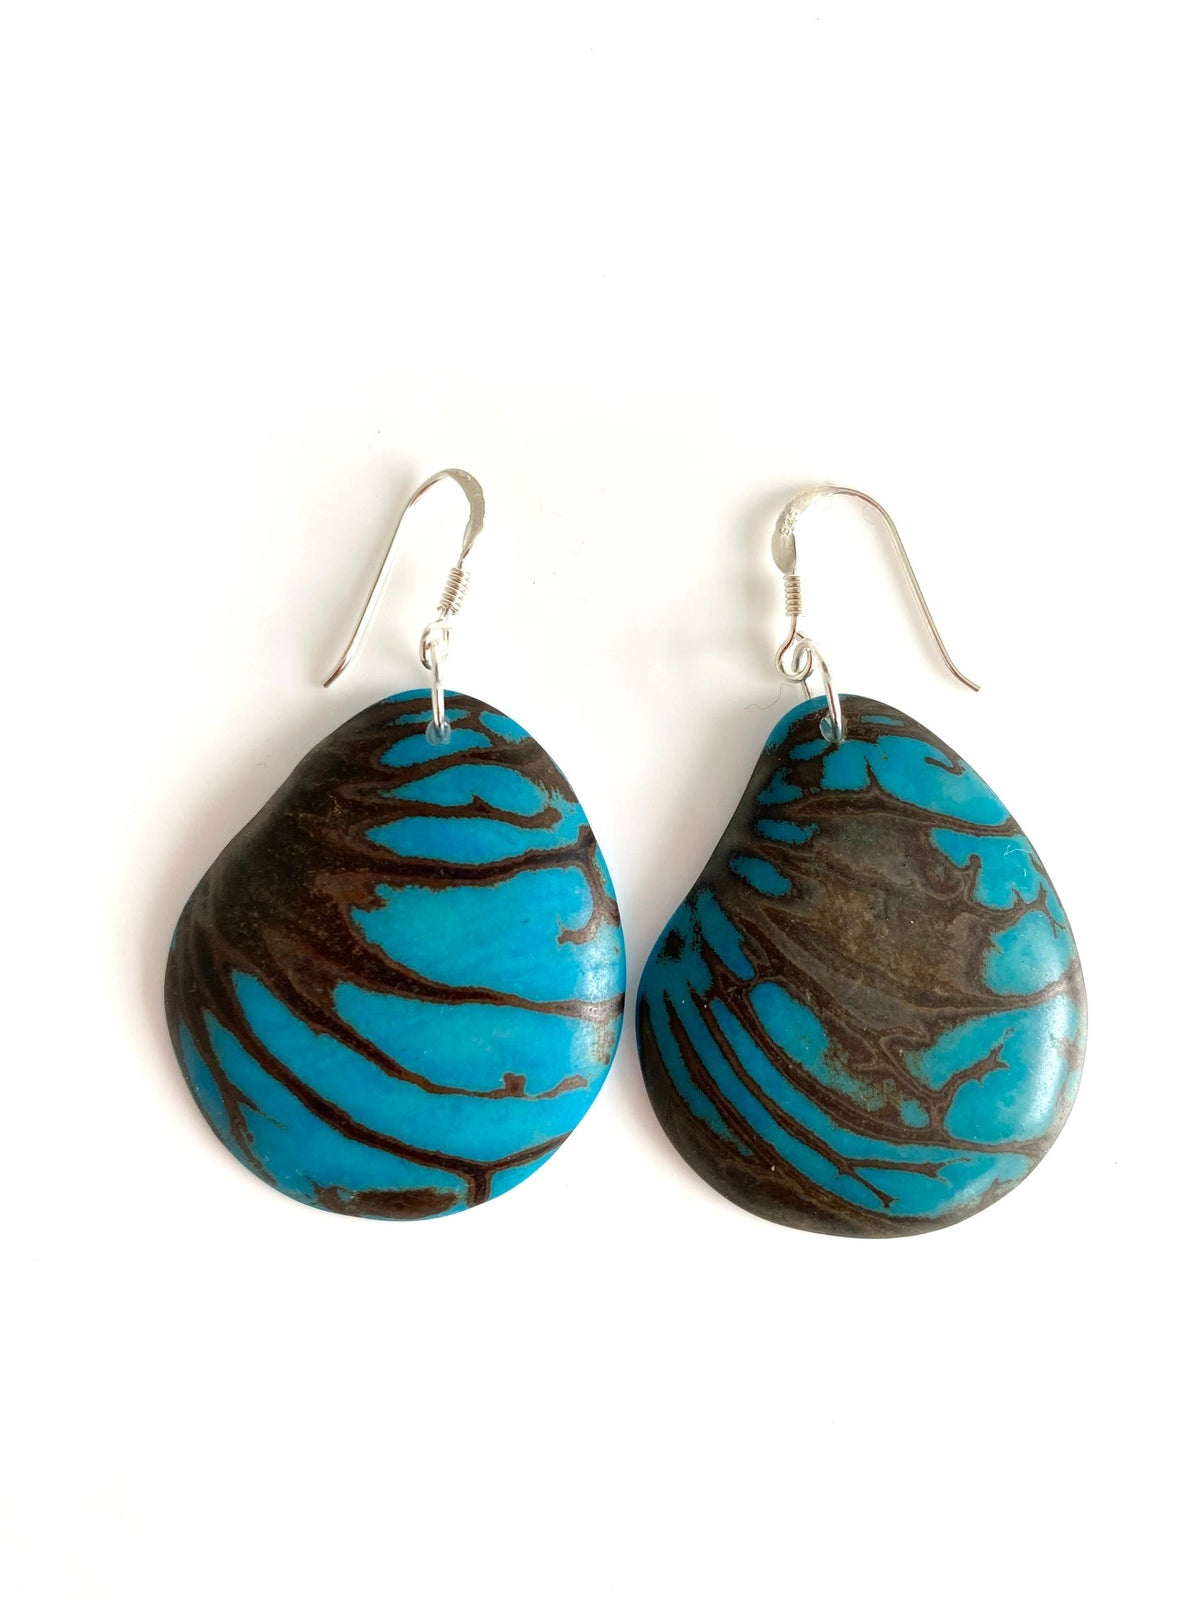 Zebra earrings - Turquoise